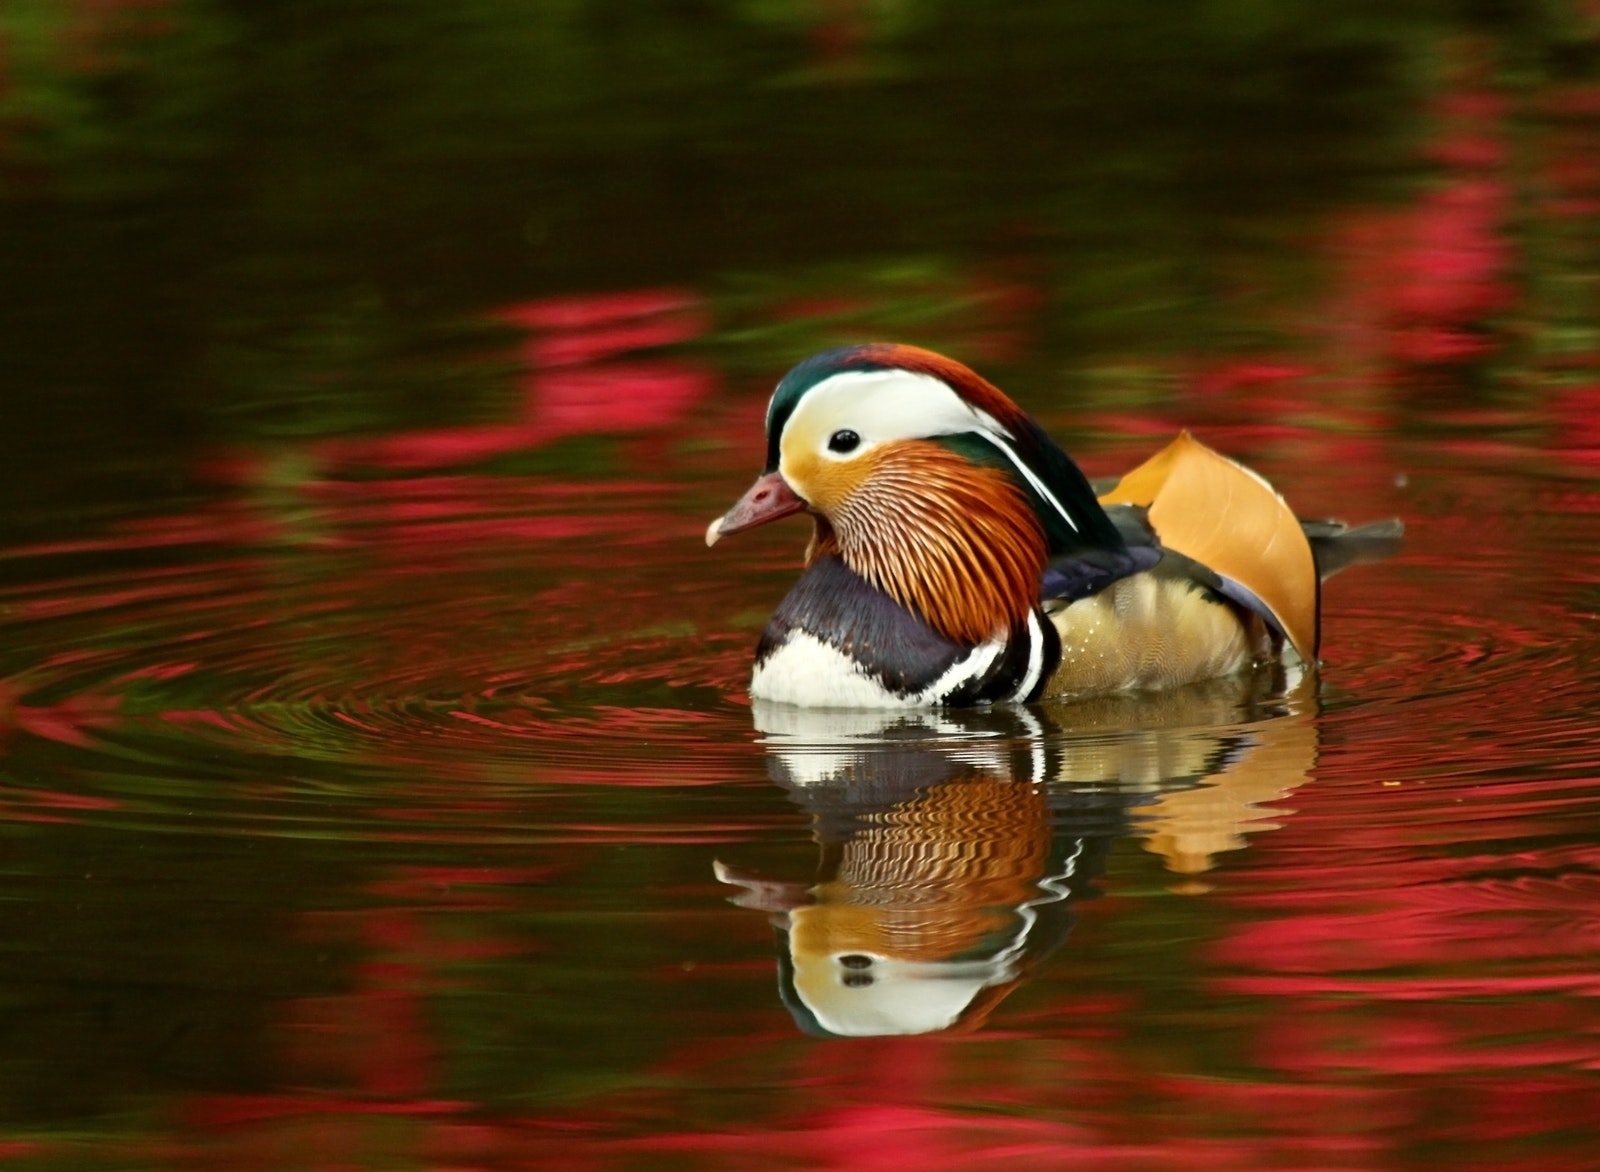 Beige Black Mandarin Duck on Red Waters during Daytime